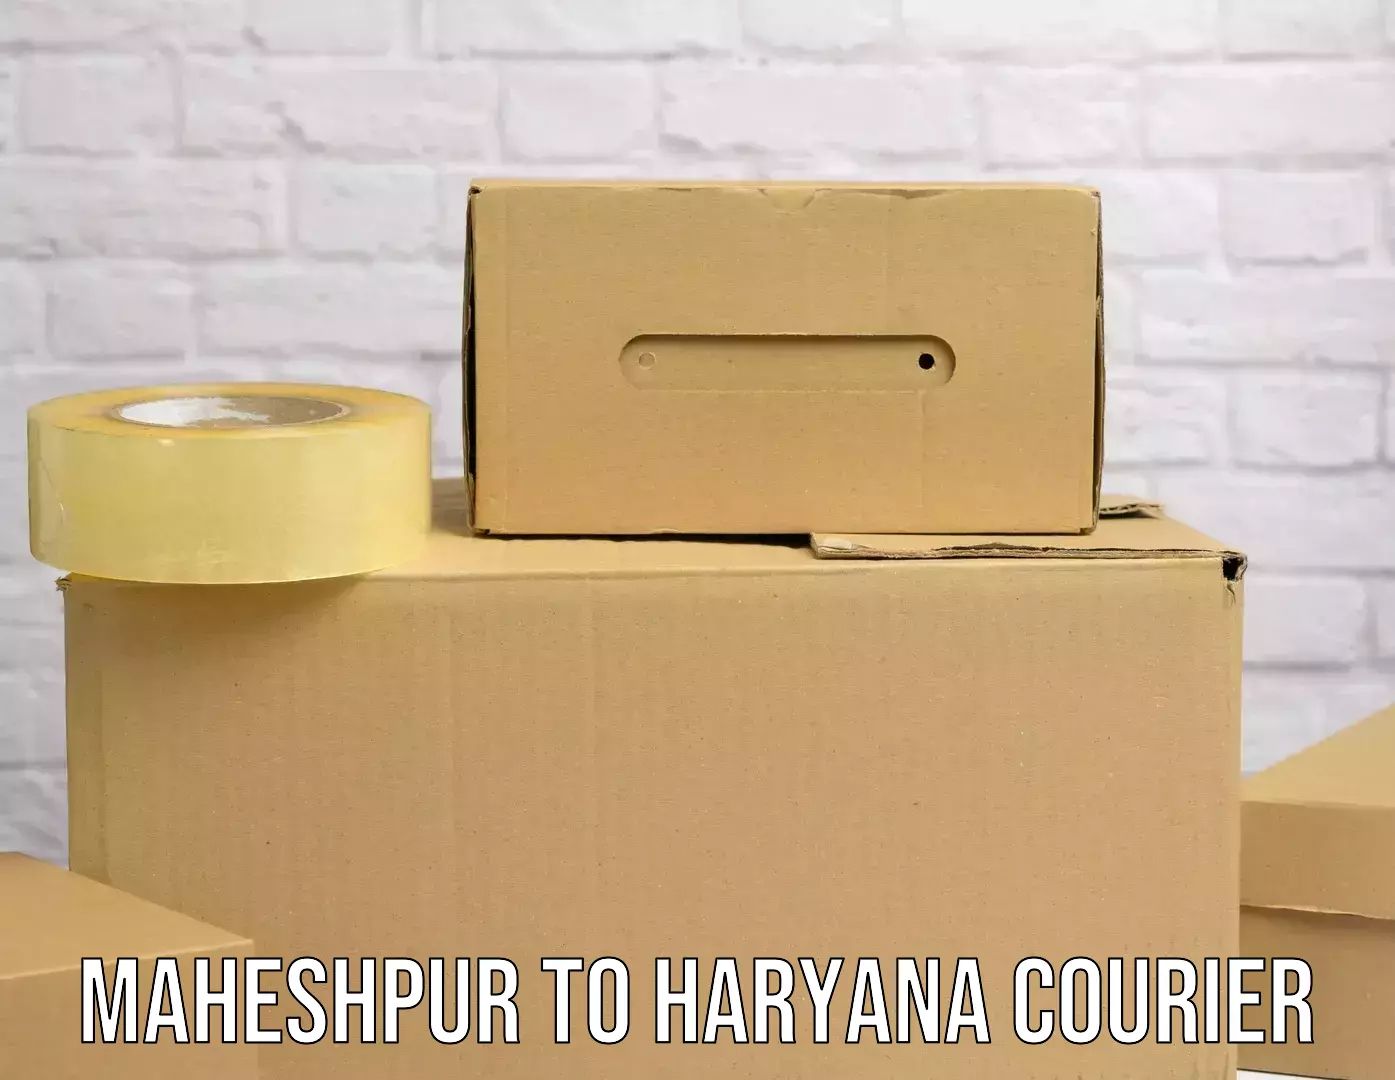 Online shipping calculator Maheshpur to Gurgaon